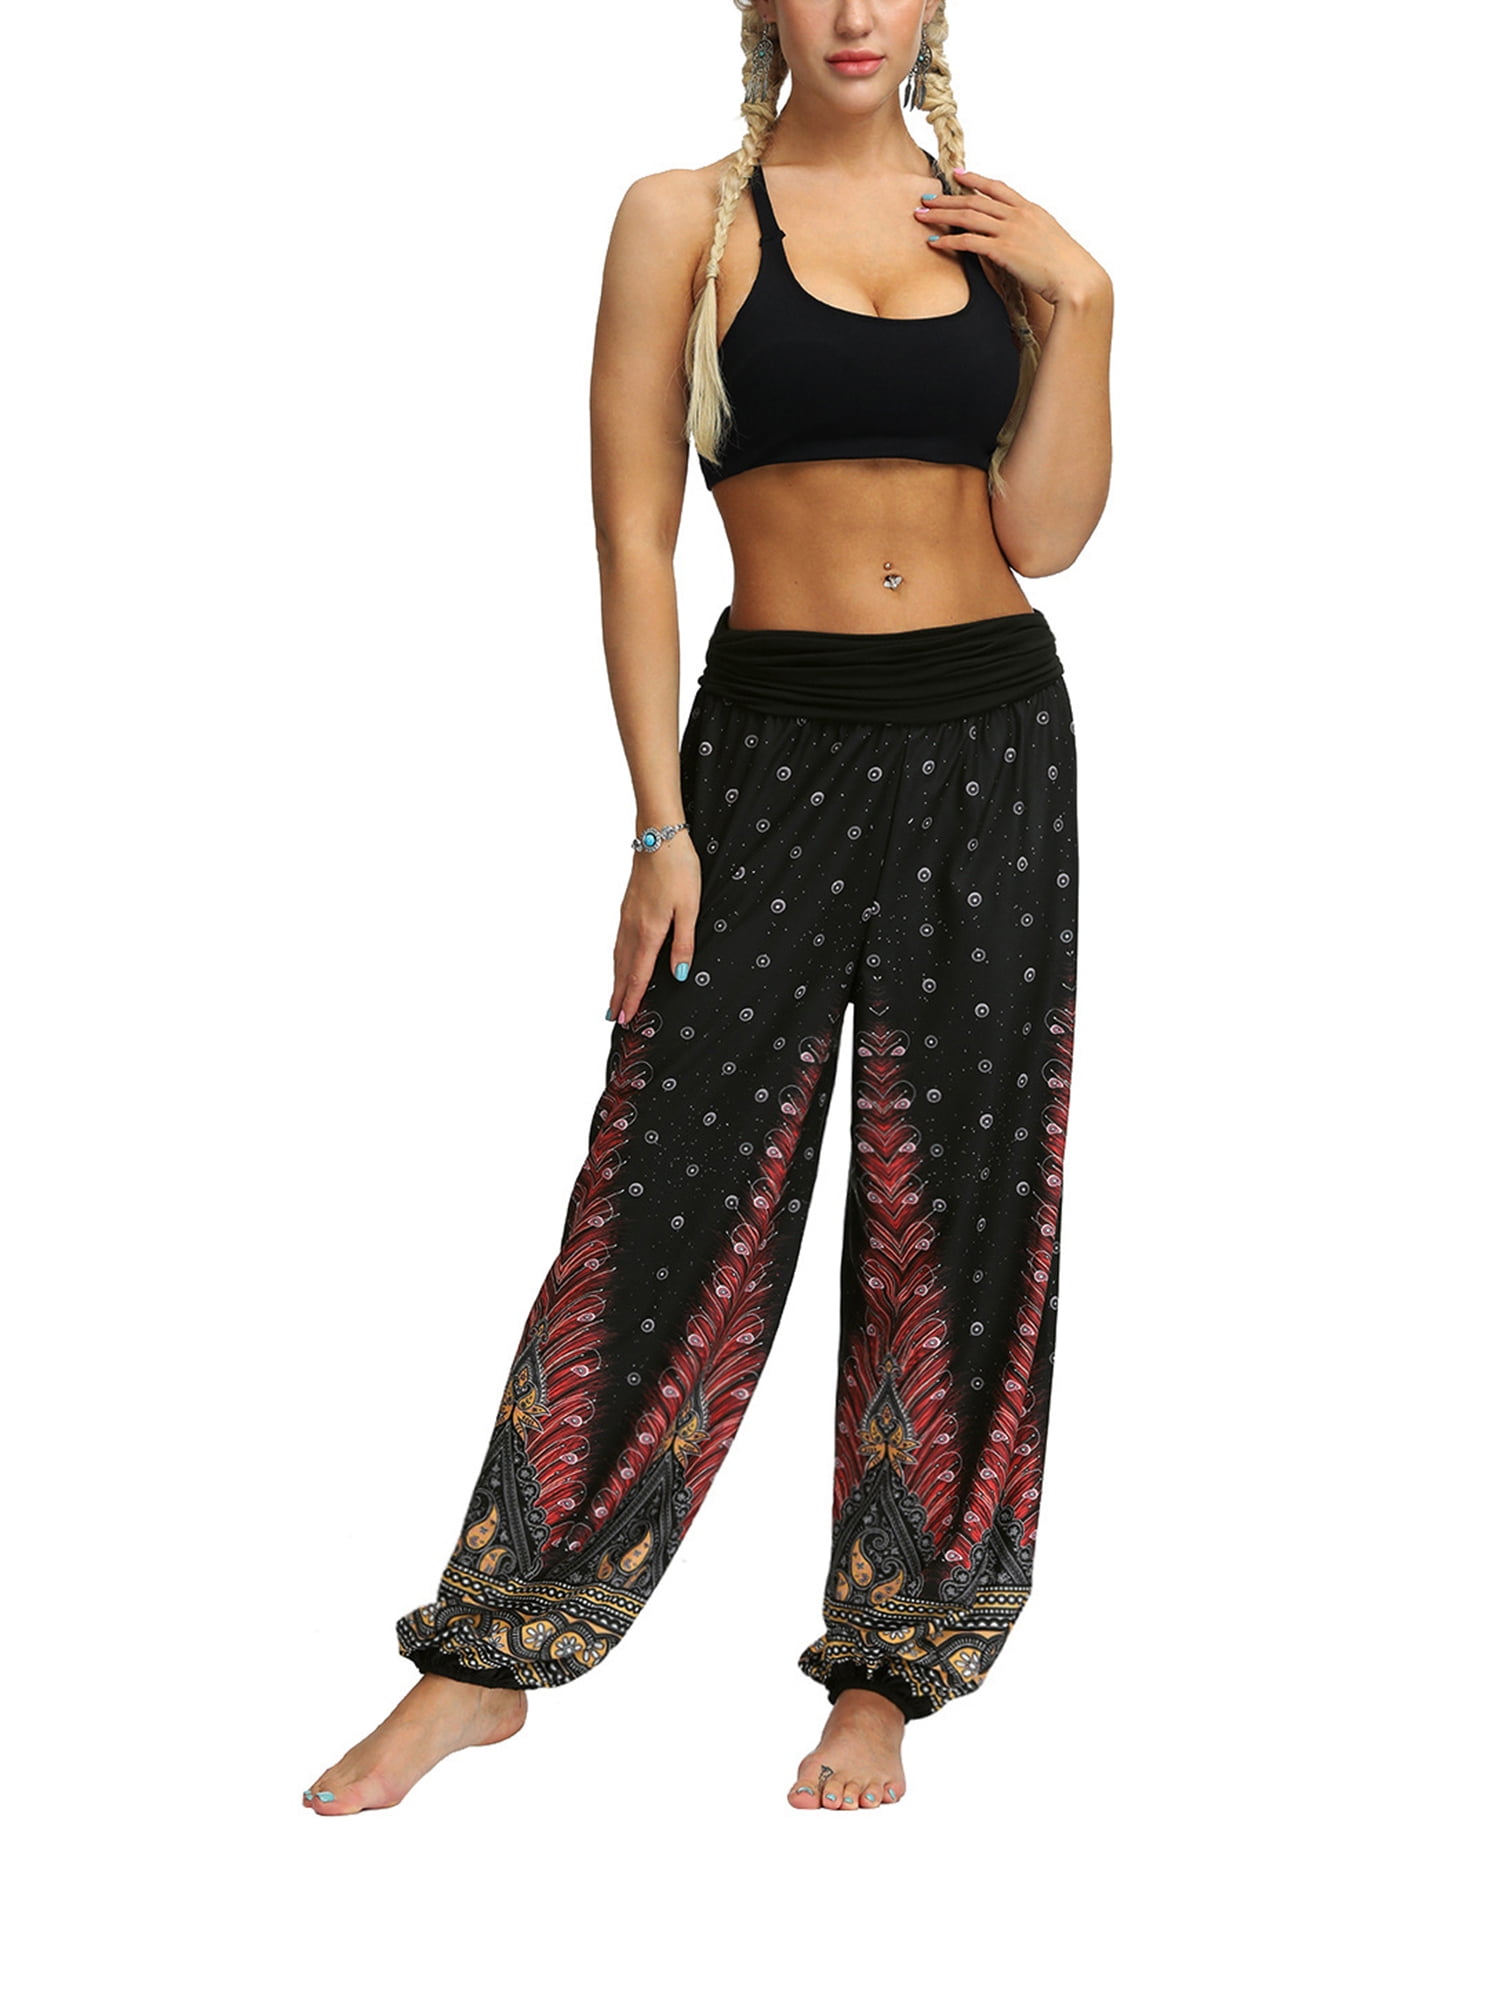 Bohotusk Harem Pants Harem Trousers Gypsy Hippie Boho Yoga Pants Small to  3XL | eBay